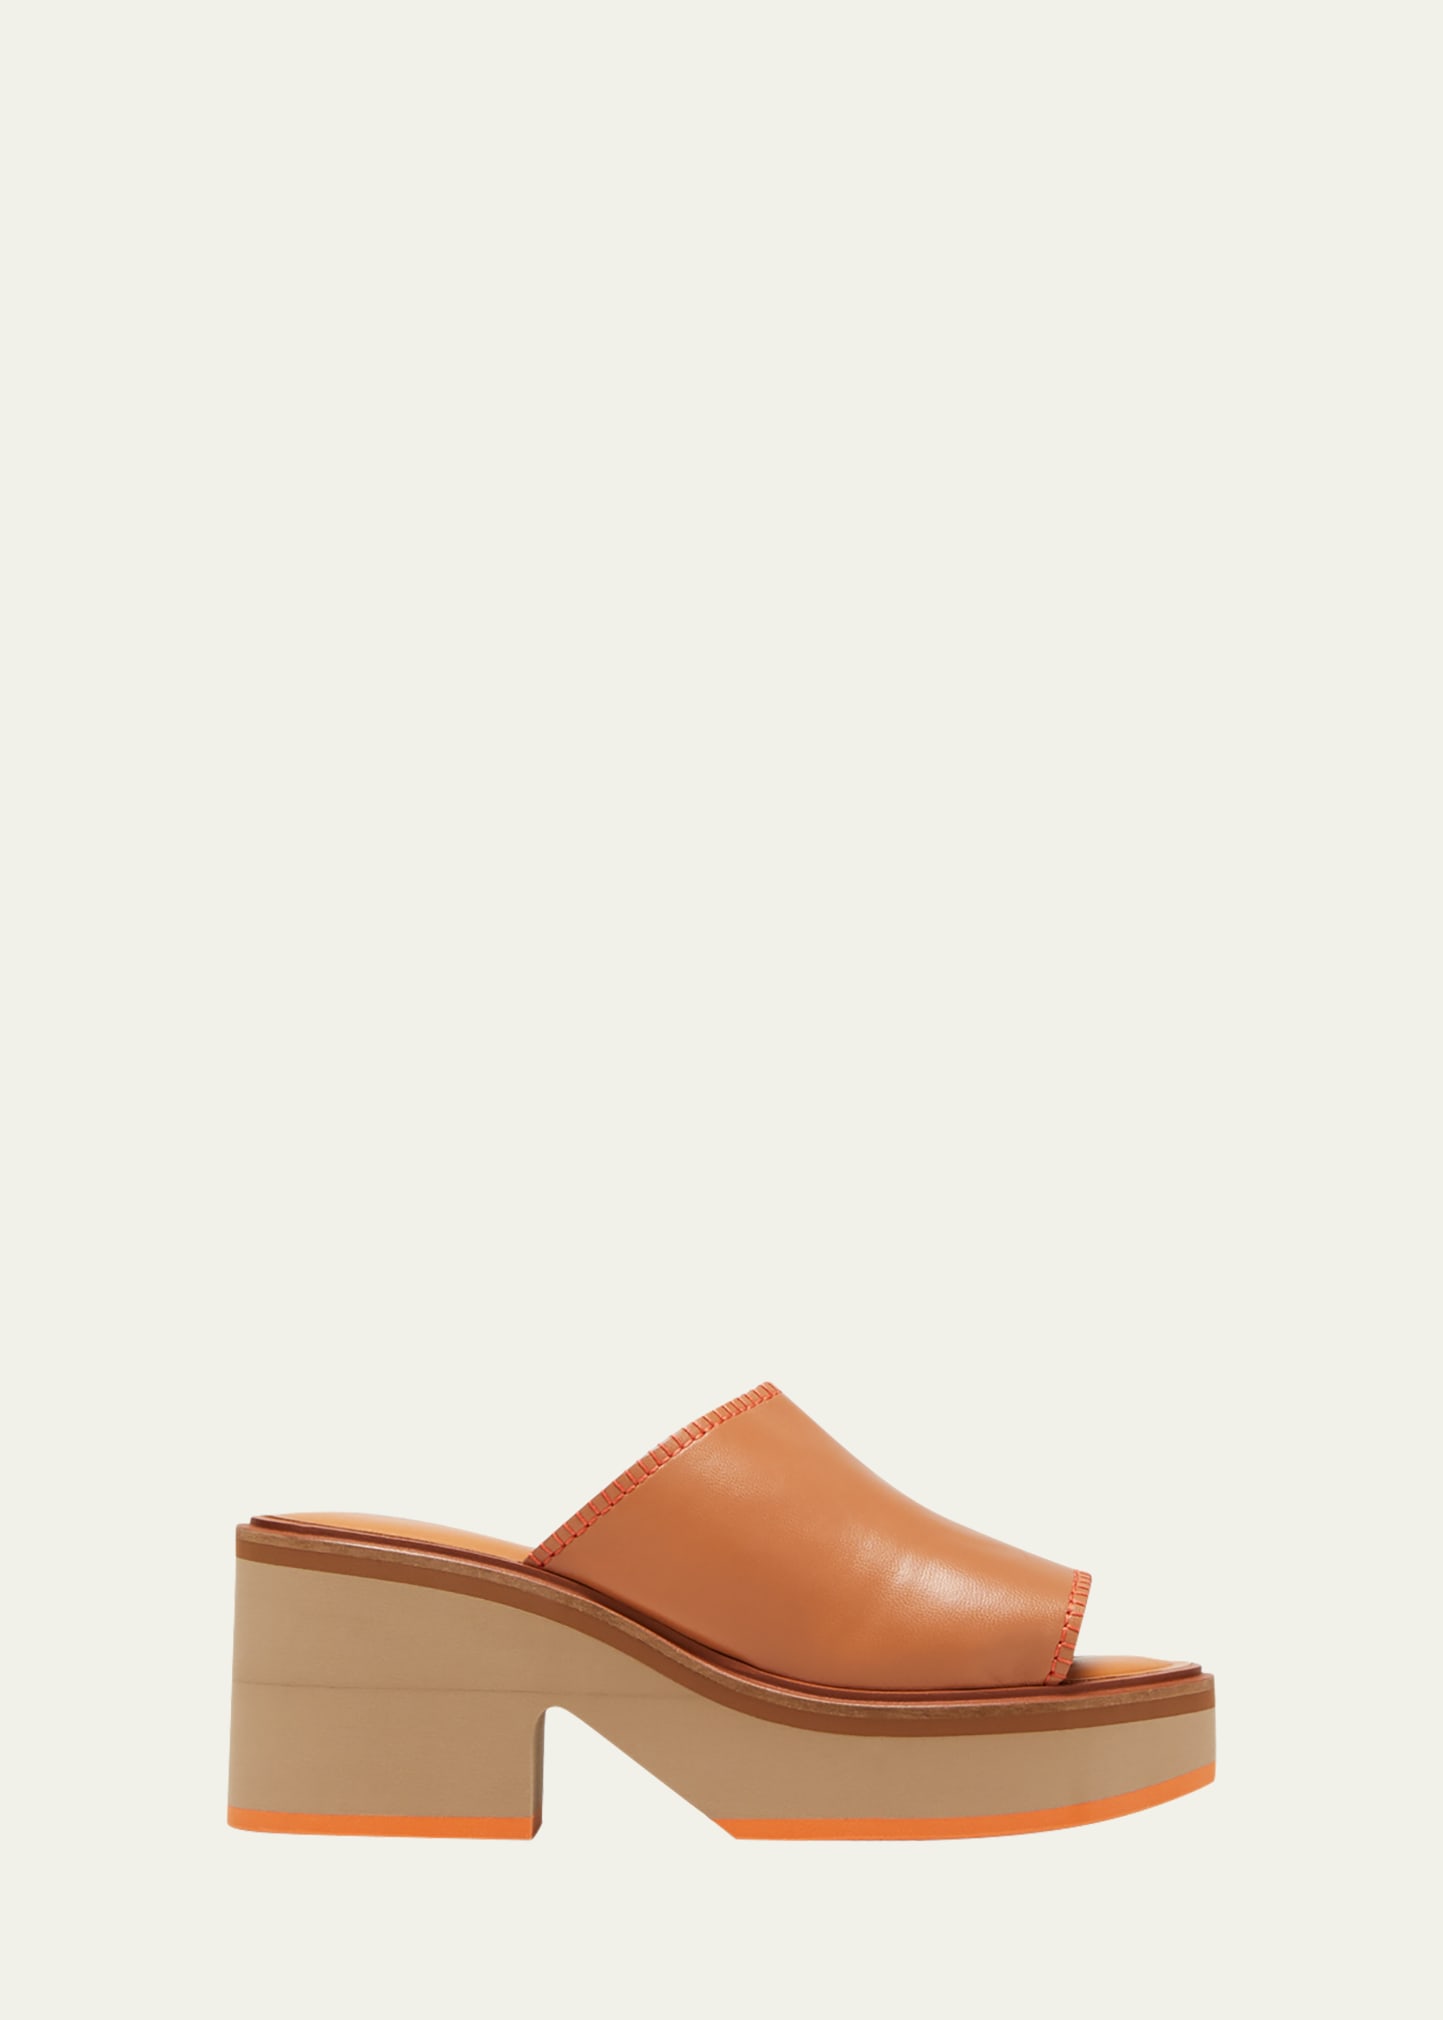 Clergerie Paris Cessy Leather Block-Heel Mule Sandals